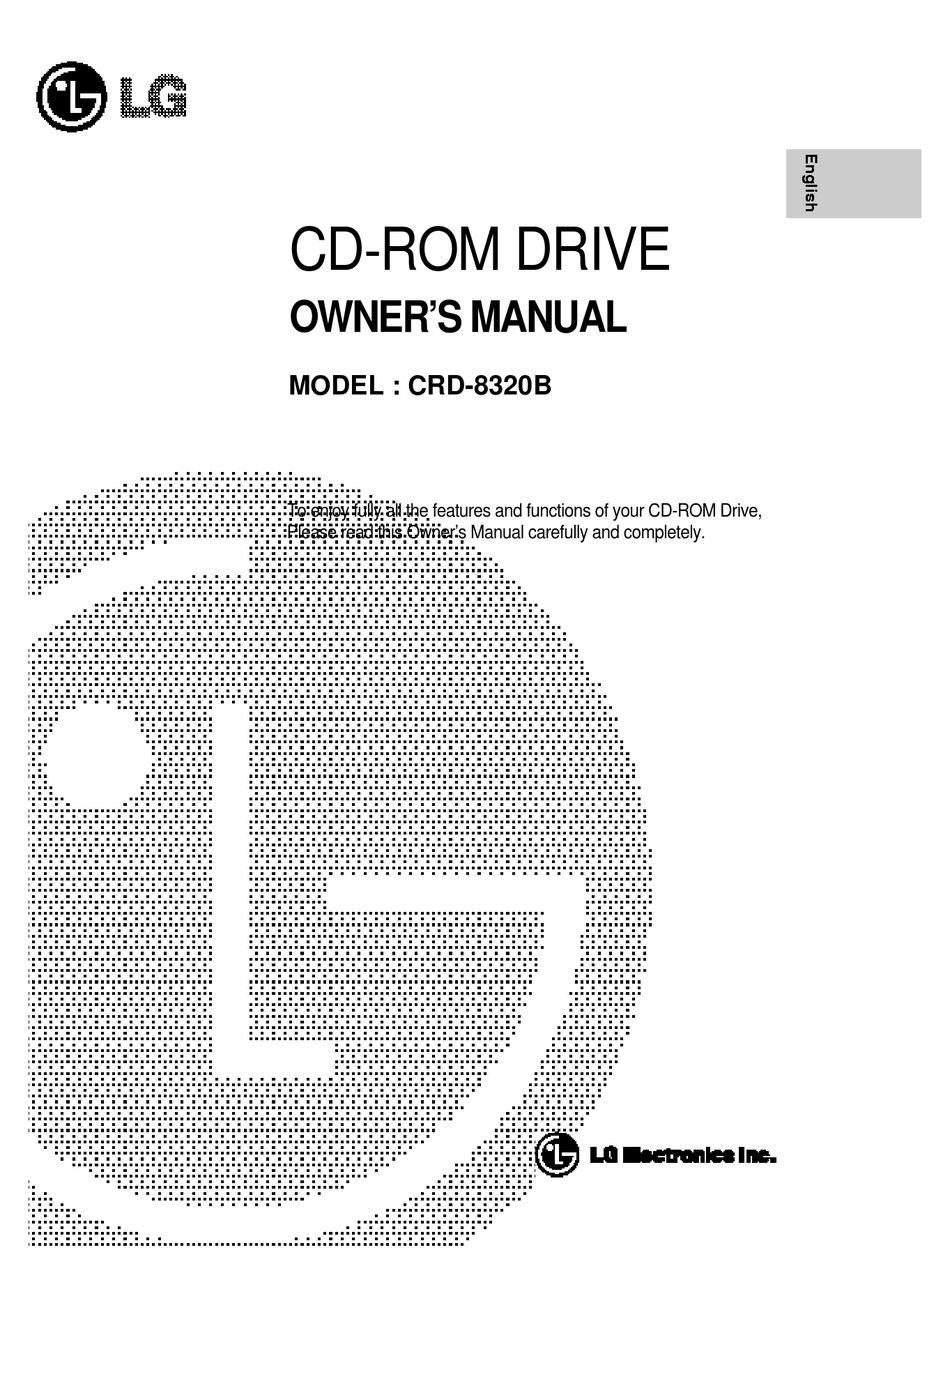 lg cd rom crd-8483b